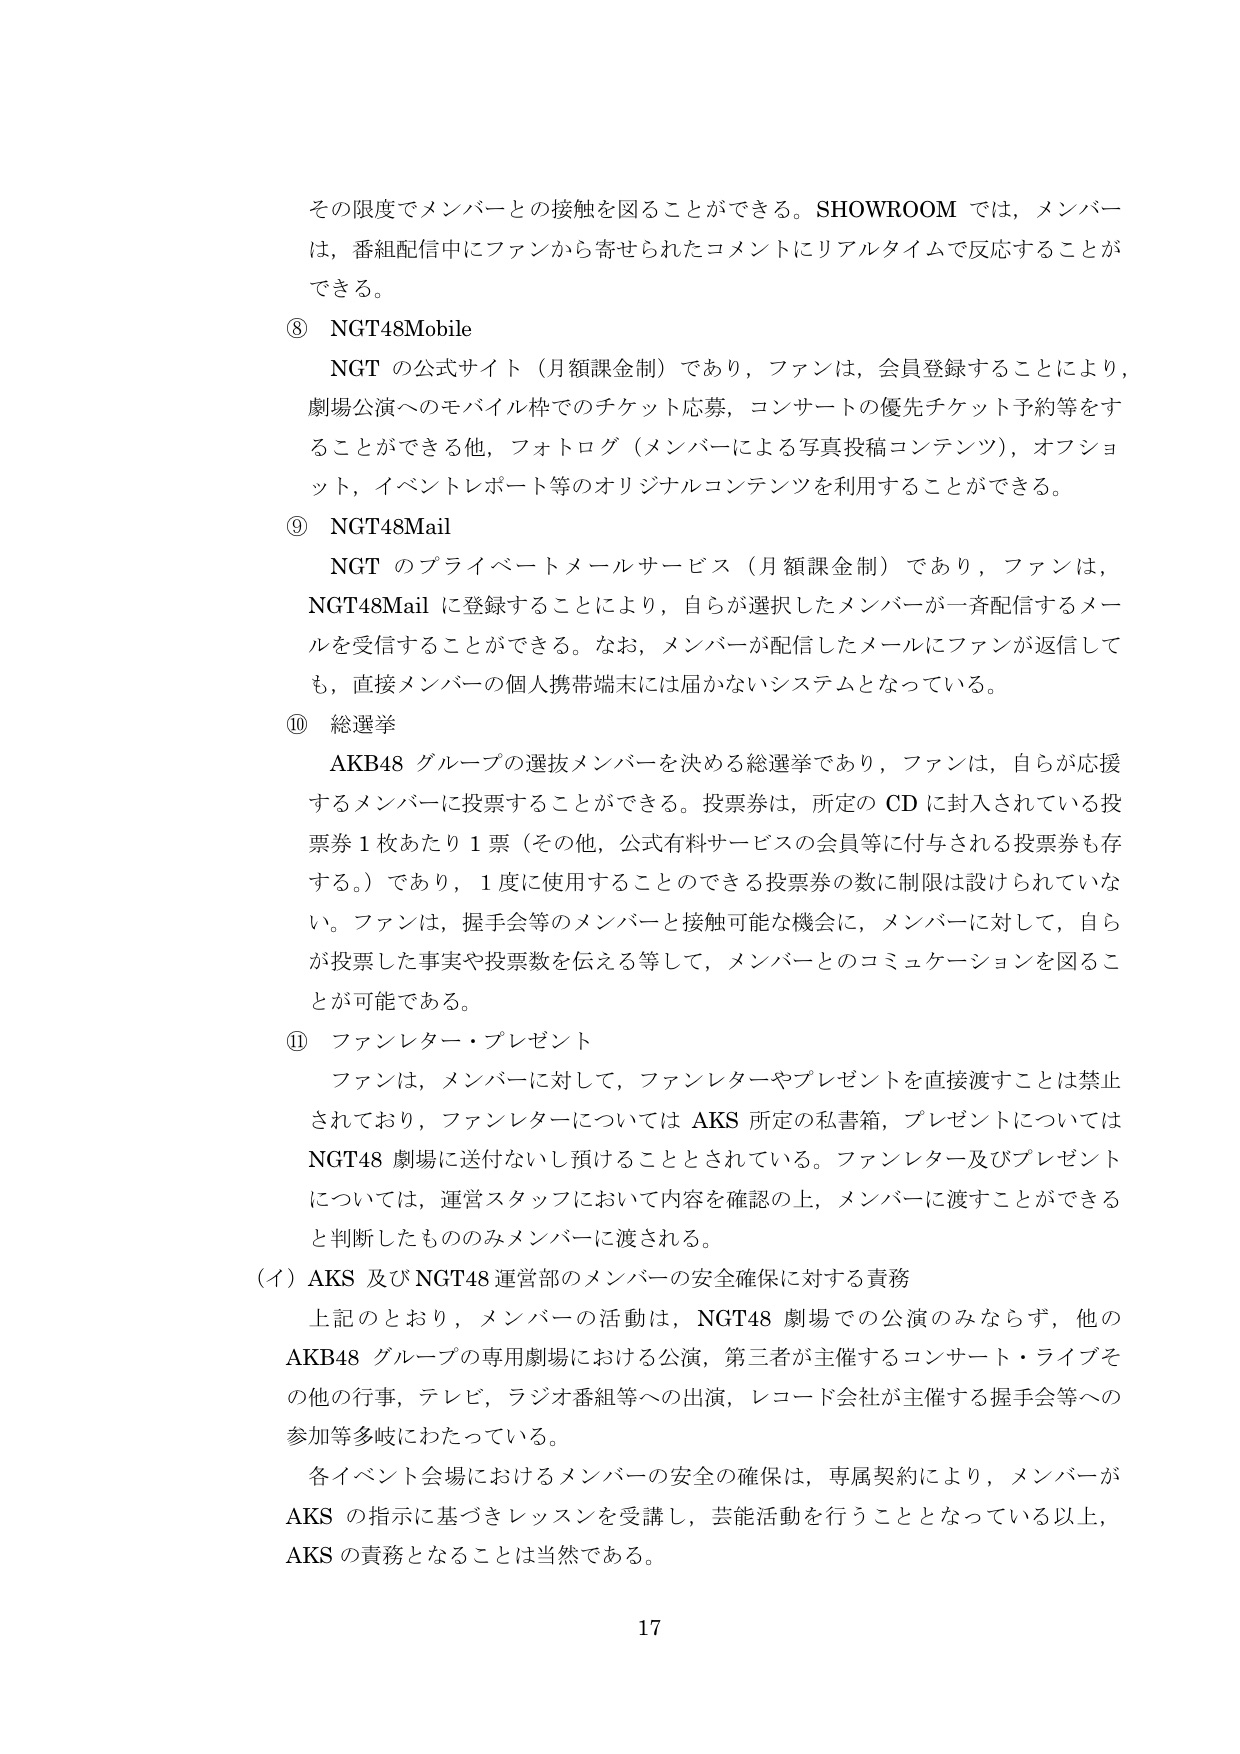 NGT48第三者委員会調査報告書19